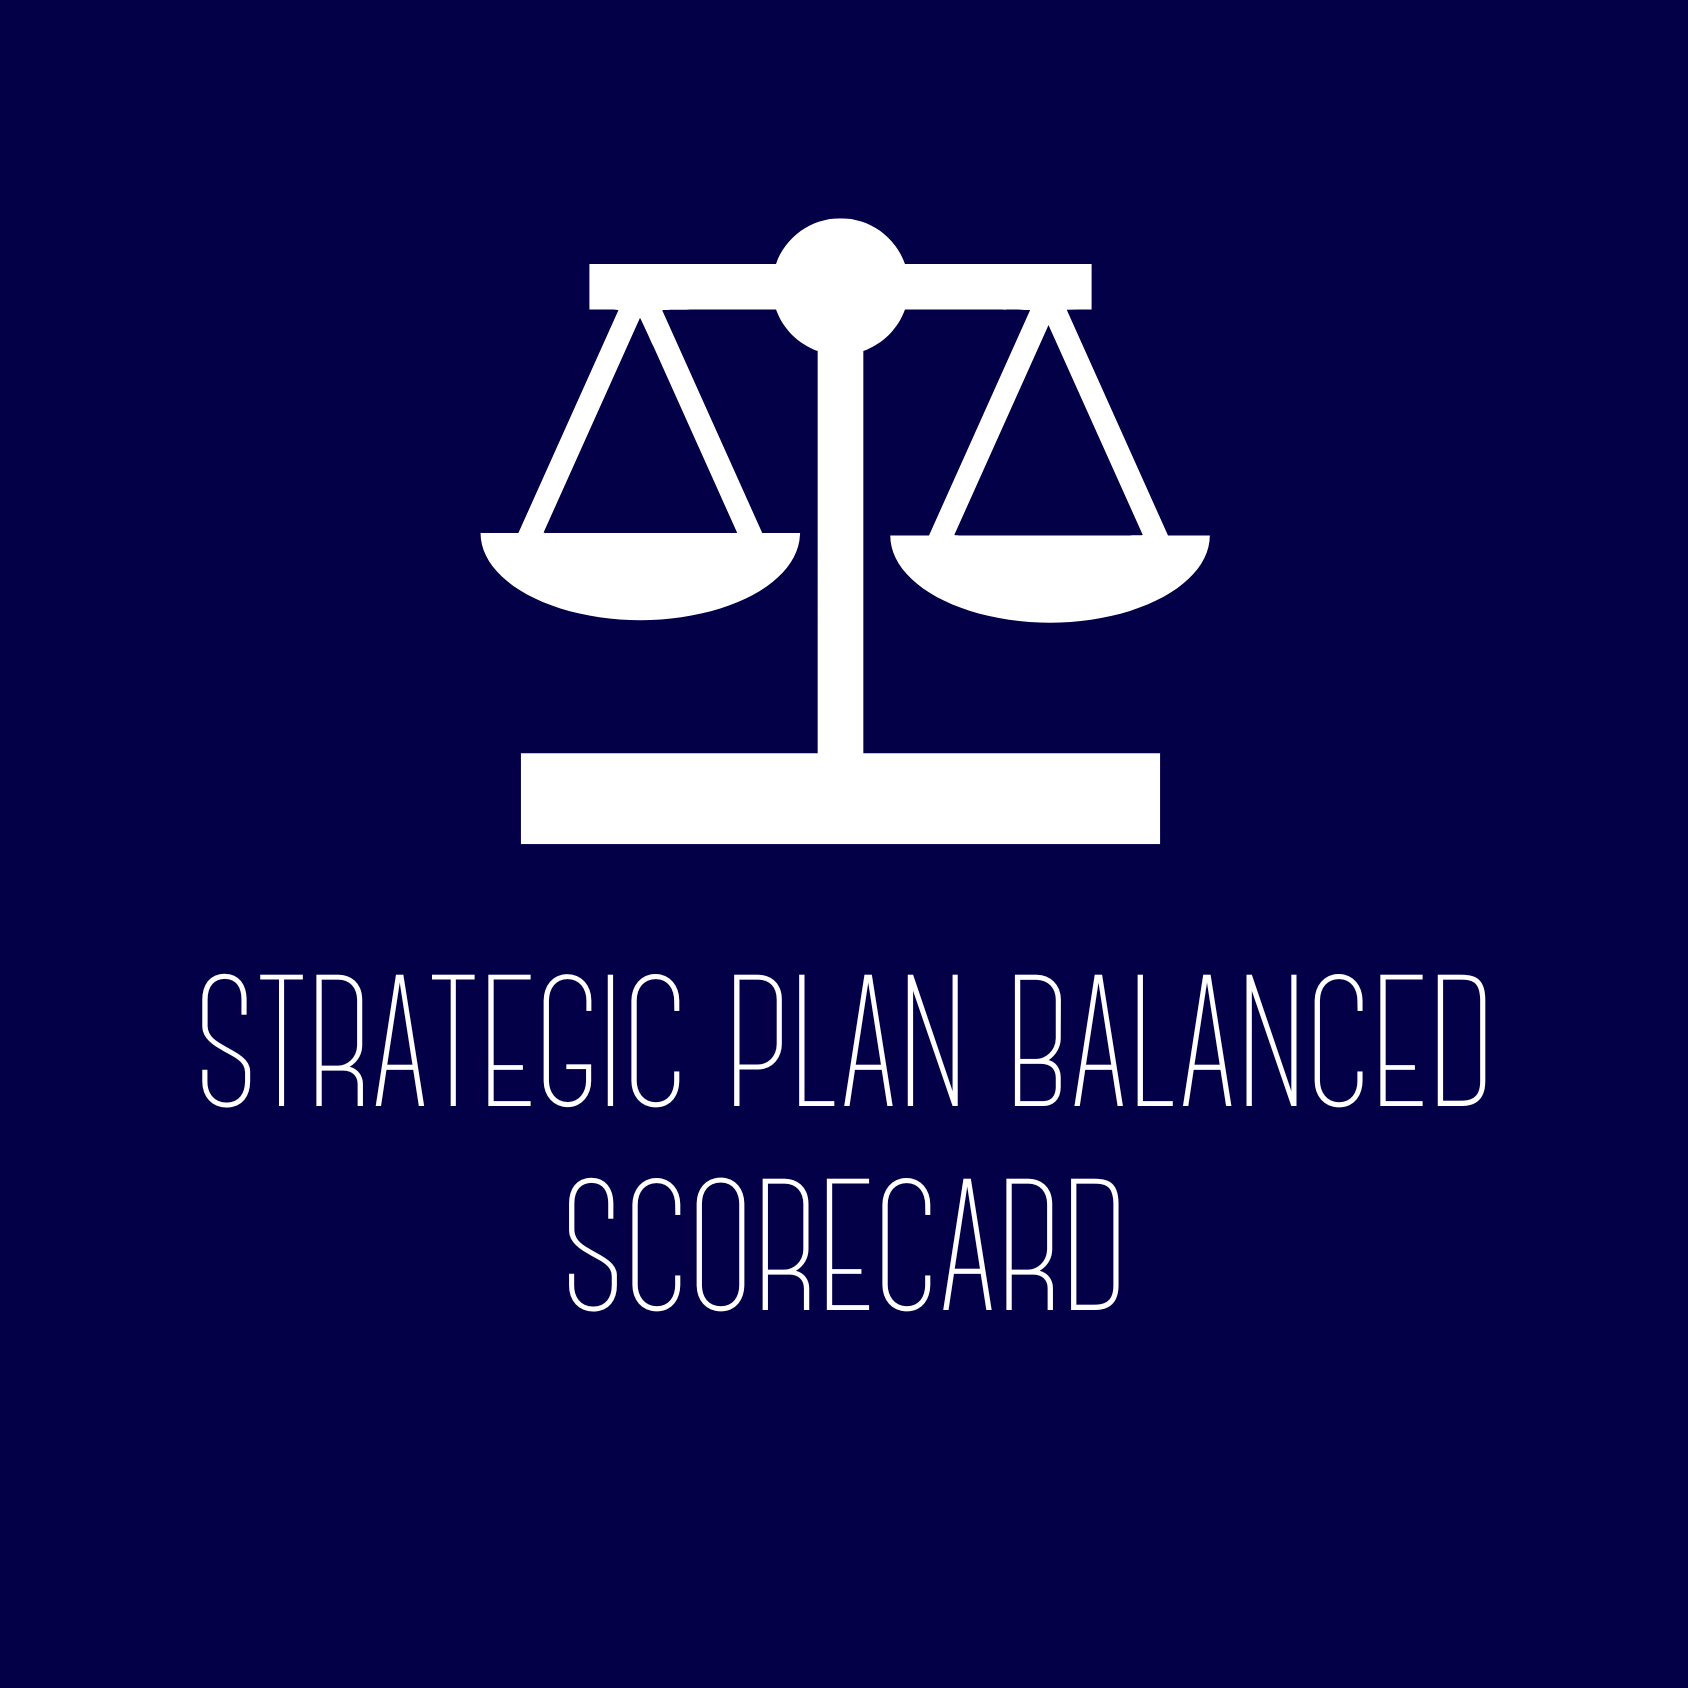 Bryan County School Strategic Plan Balanced Scorecard